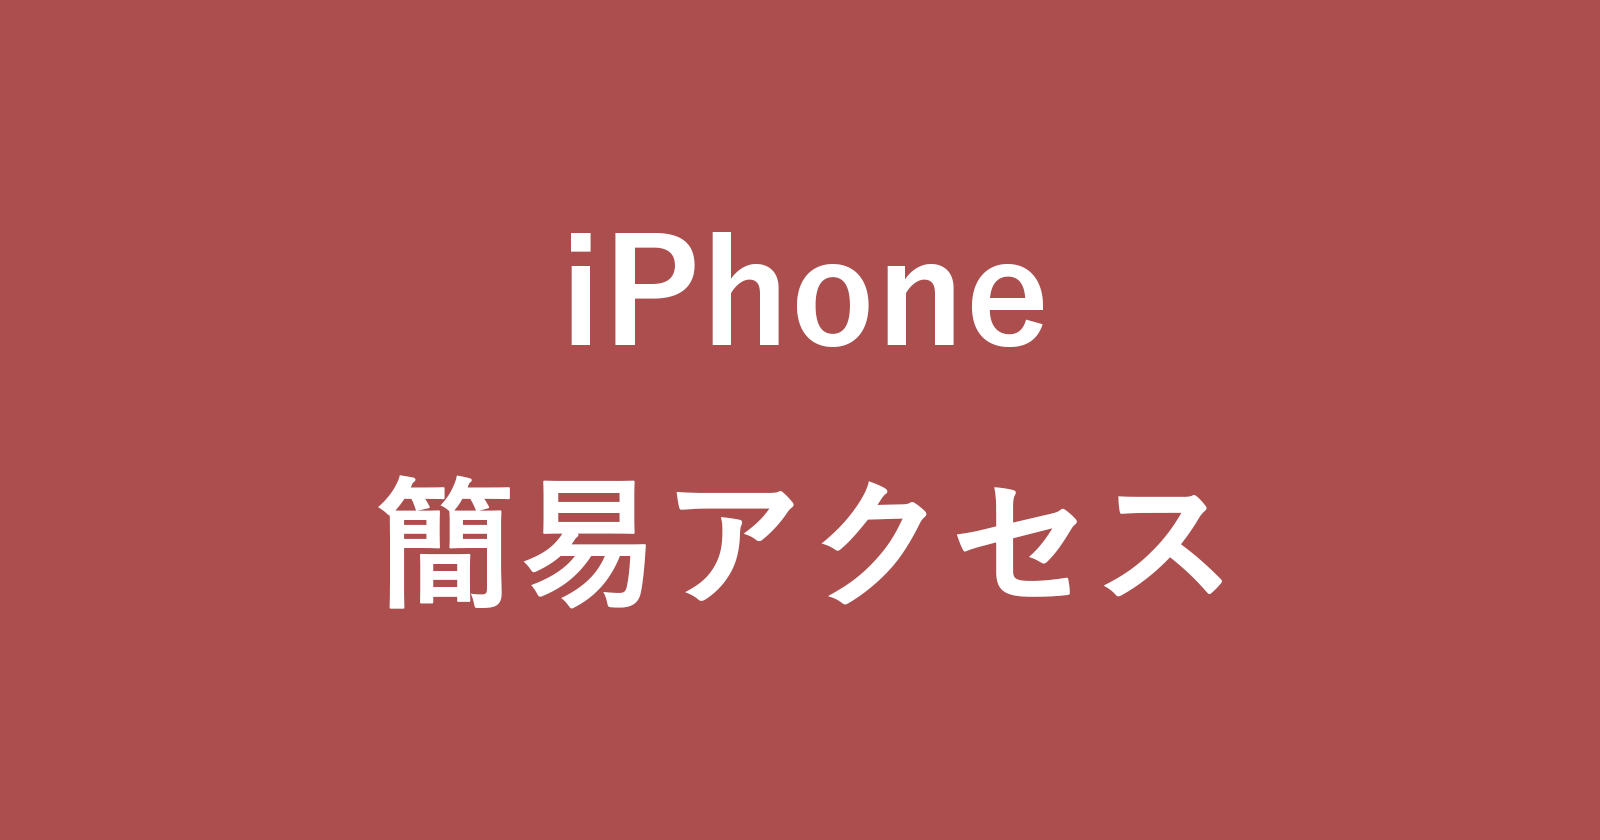 iphone reachablity